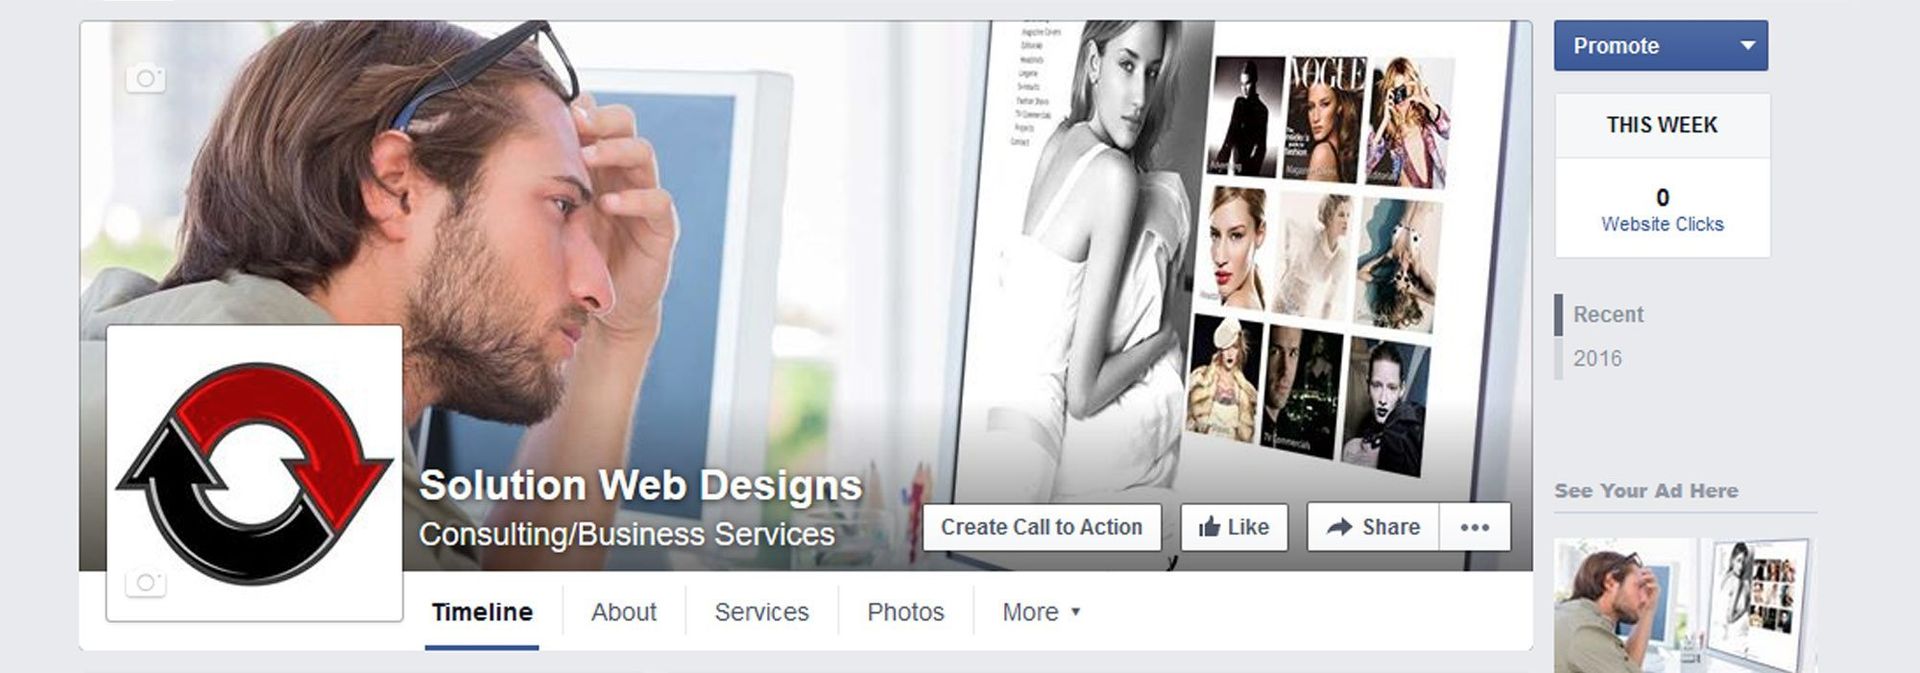 Facebook Marketing Agency Solution Web Designs